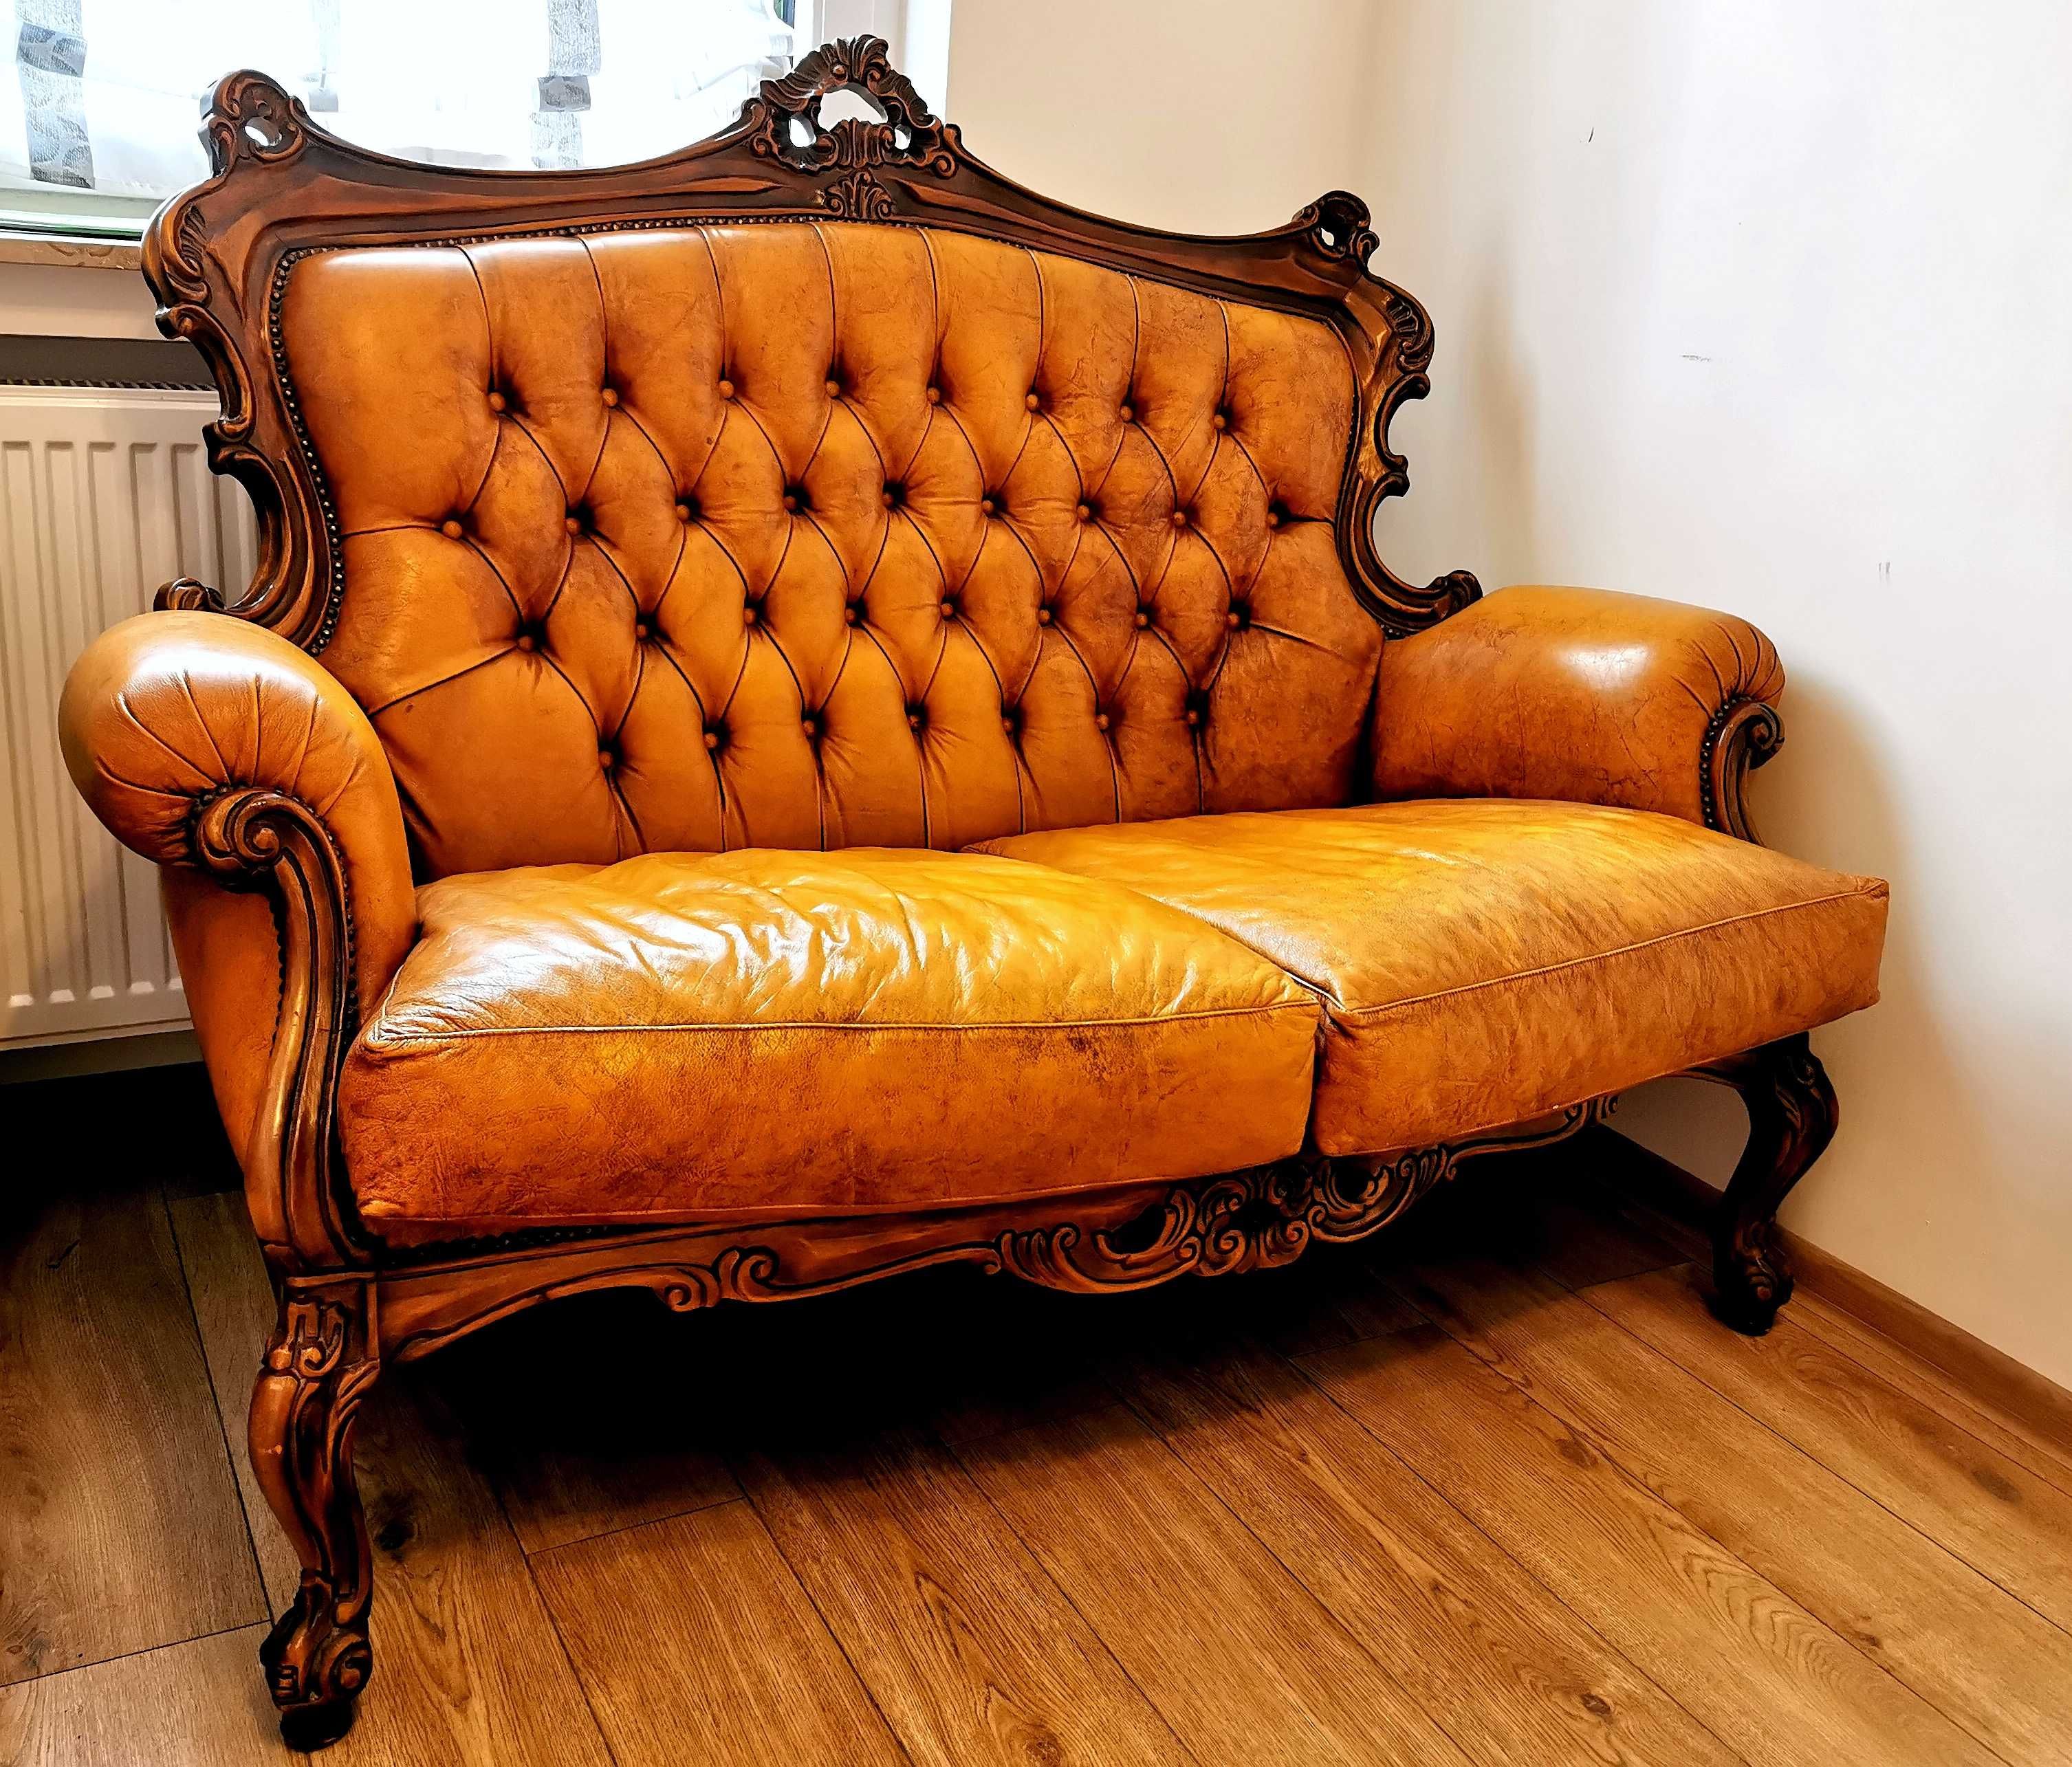 Sofa vintage, skóra i drewno. Niepowtarzalny styl!!